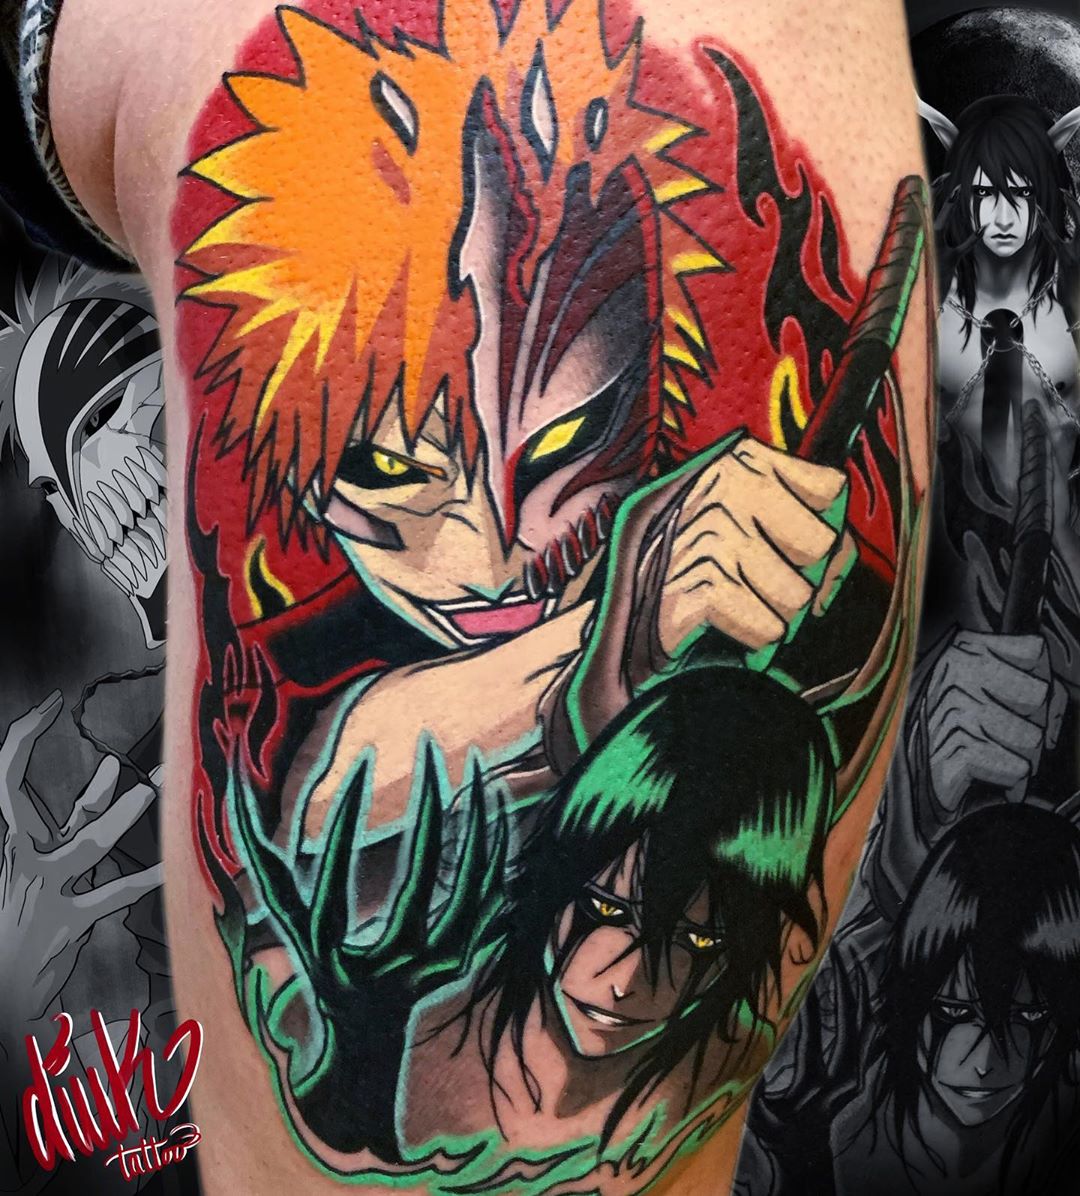 Impressive image of an anime tattoo